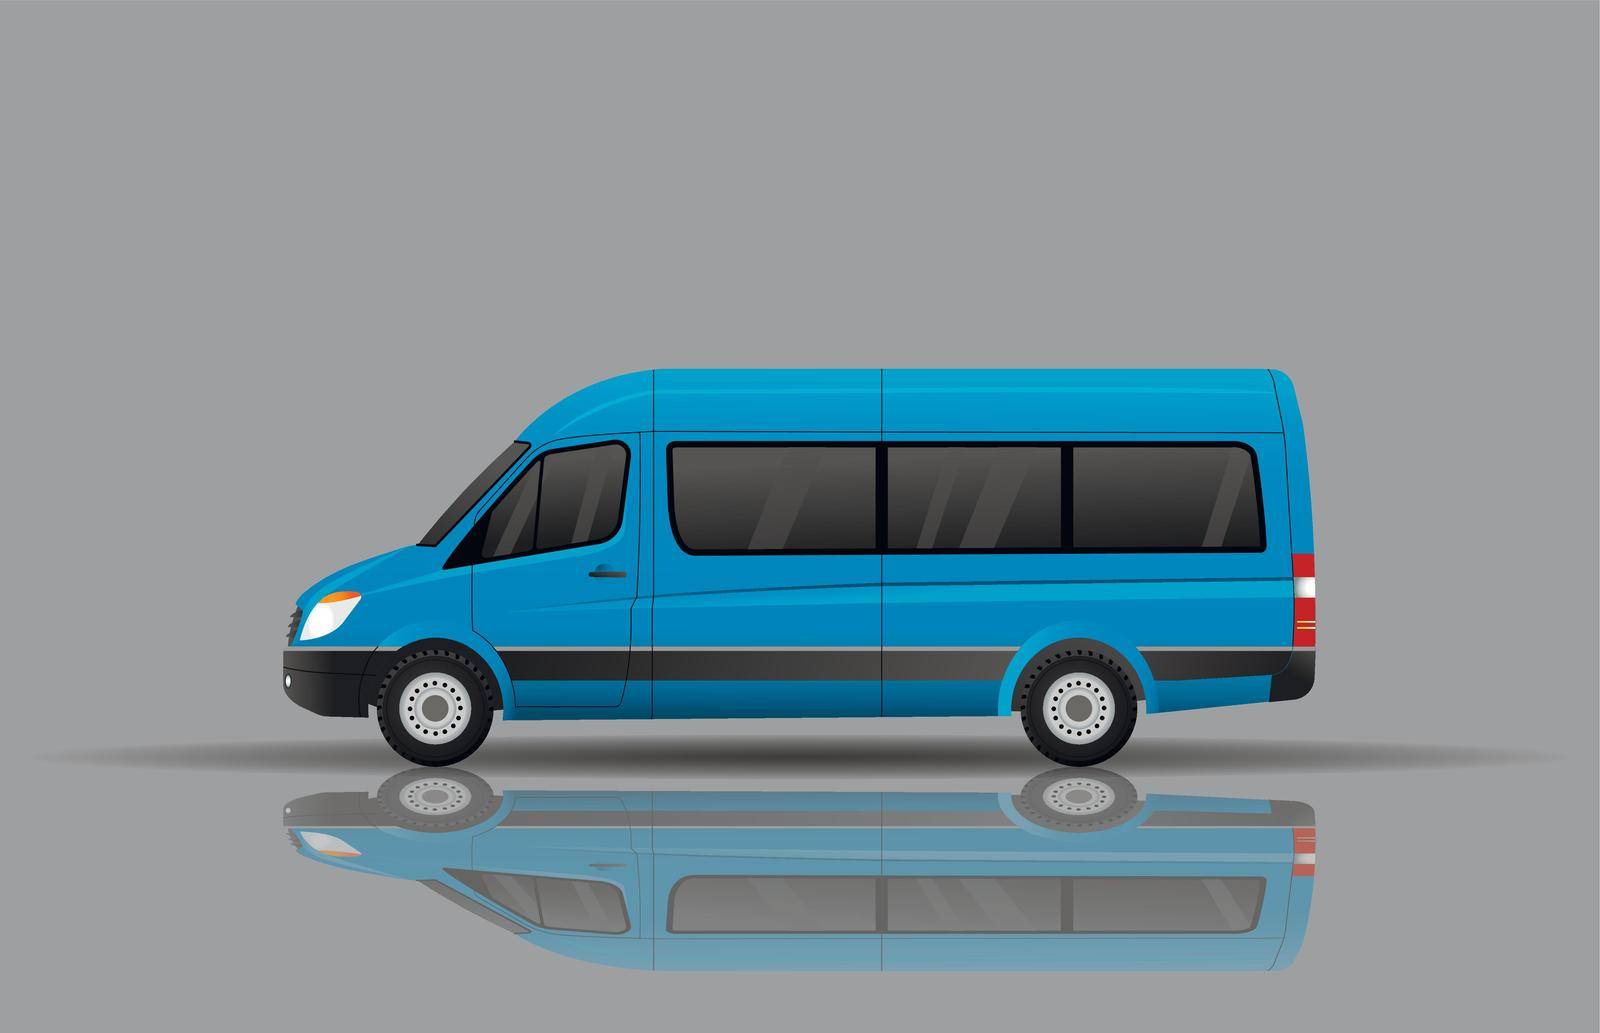 Blue passenger minibus, reflected on the ground. Urban transport. Flat vector illustration.